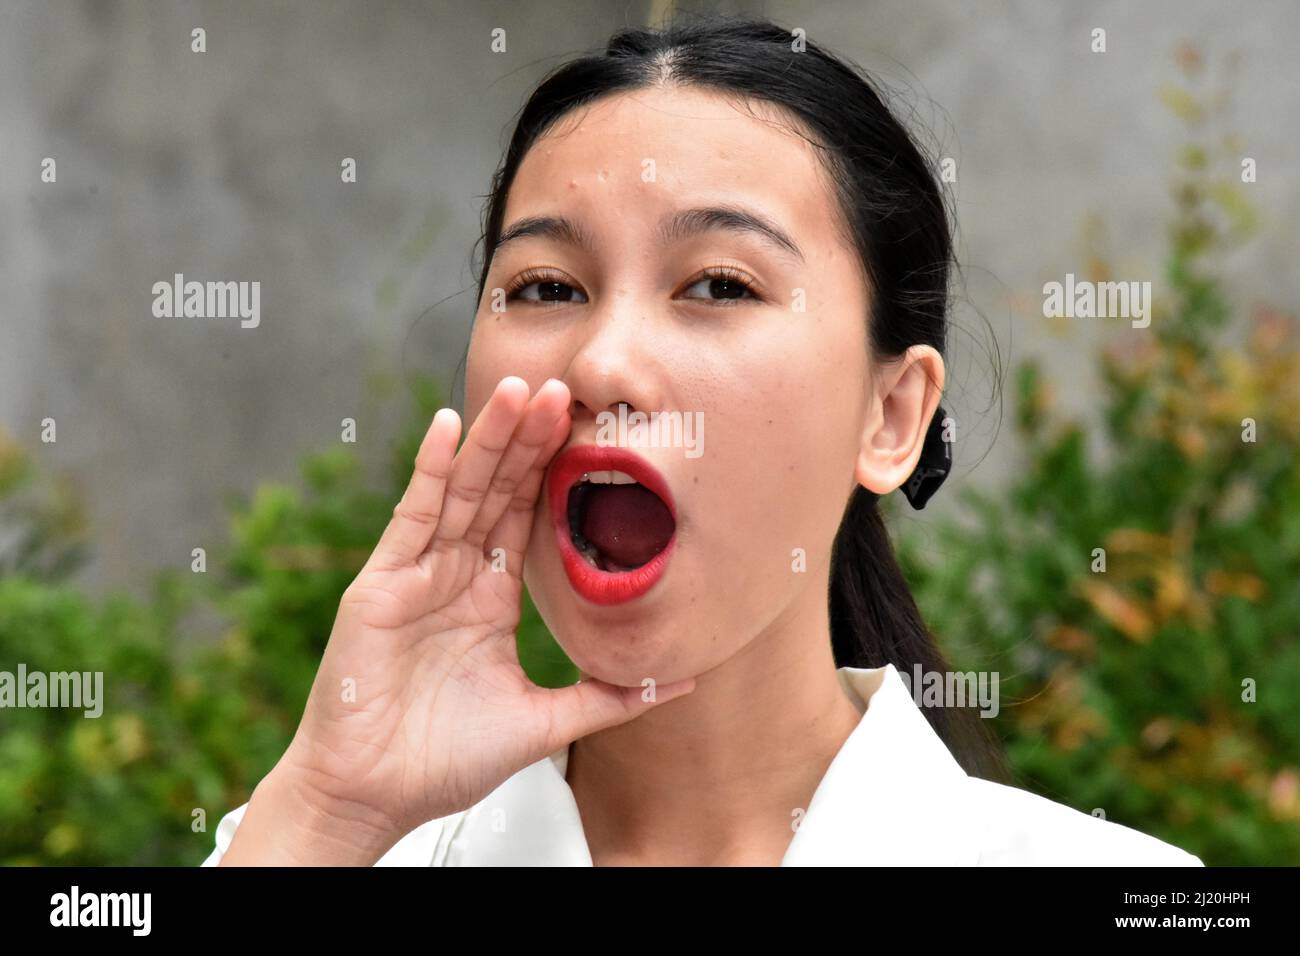 An Asian Woman Talking Or Yelling Stock Photo